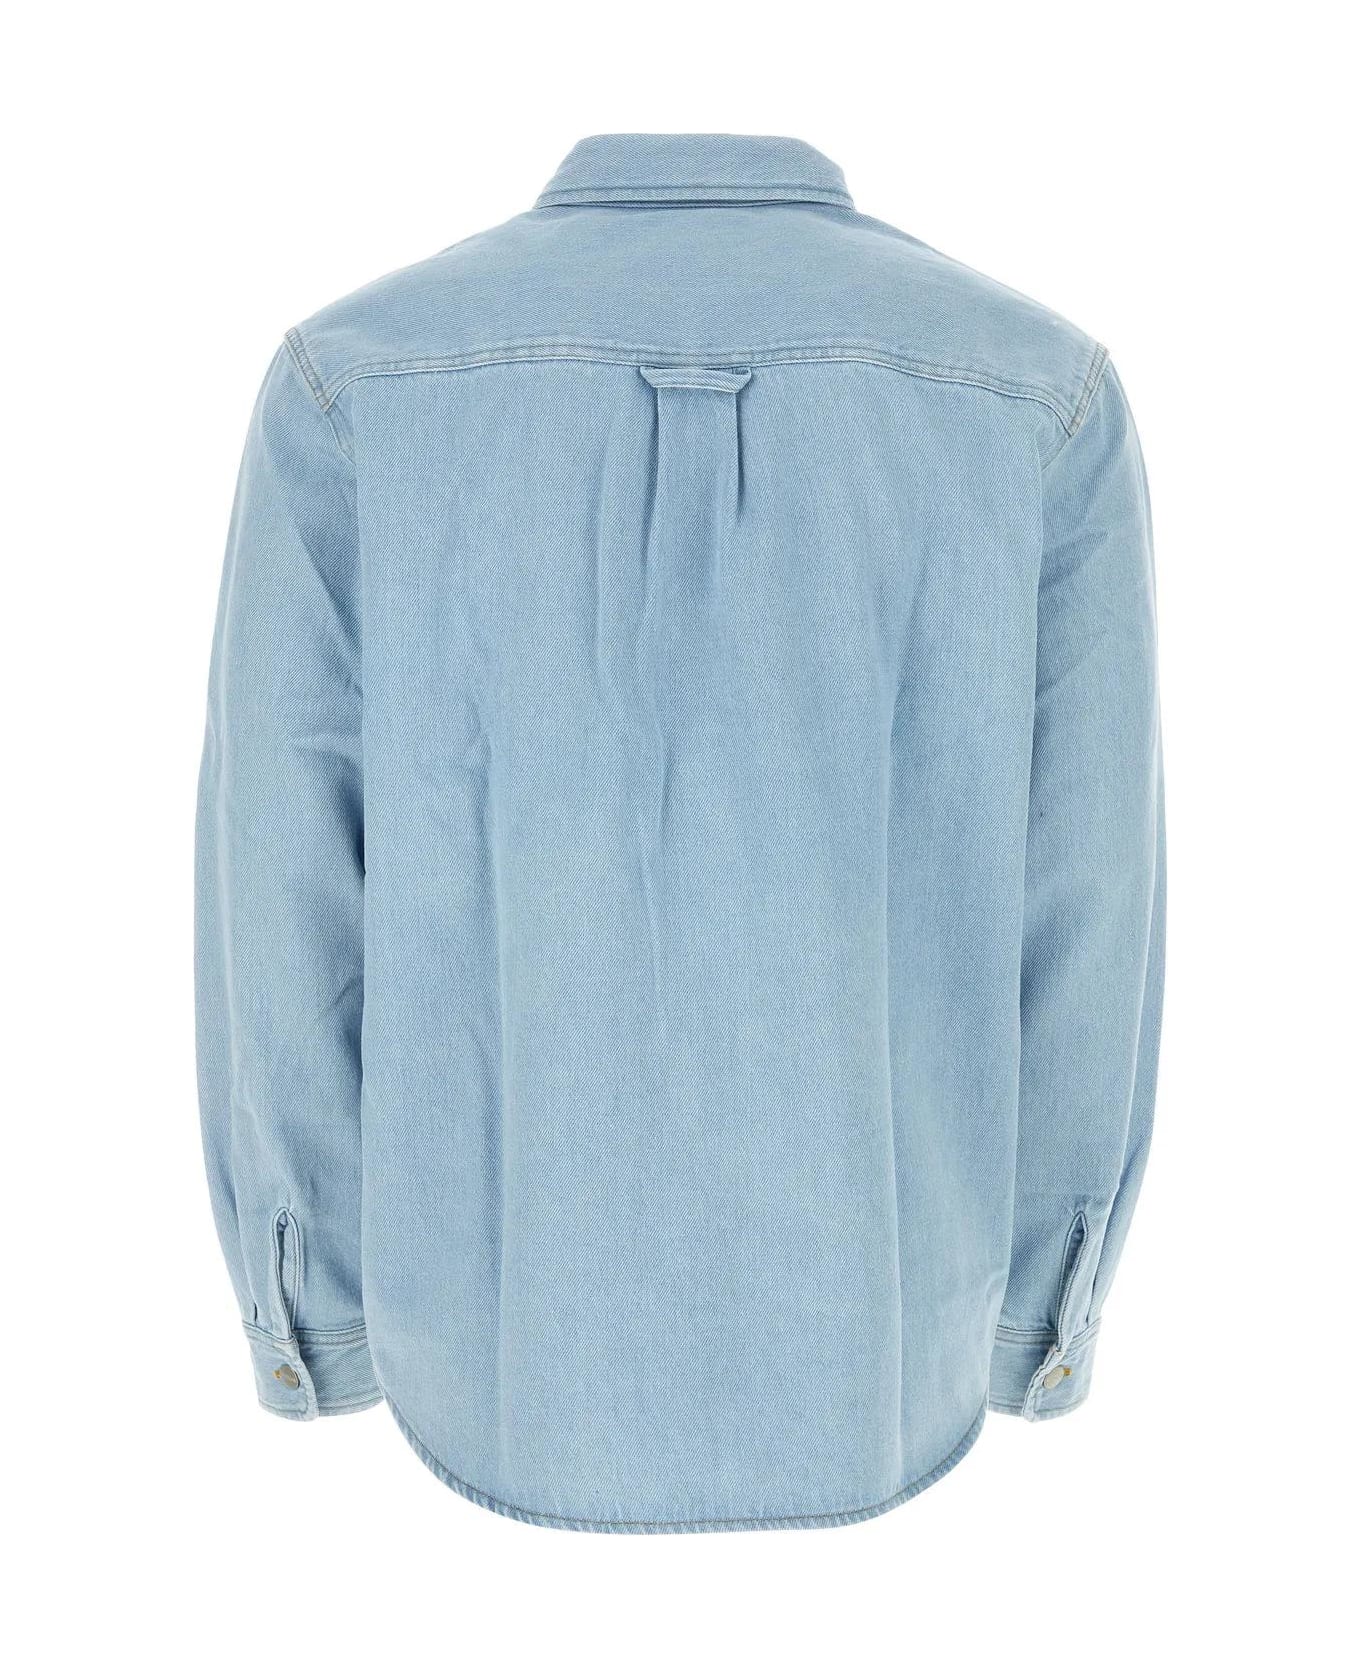 Carhartt WIP Light Blue Denim Harvey Shirt Jac - Denim シャツ